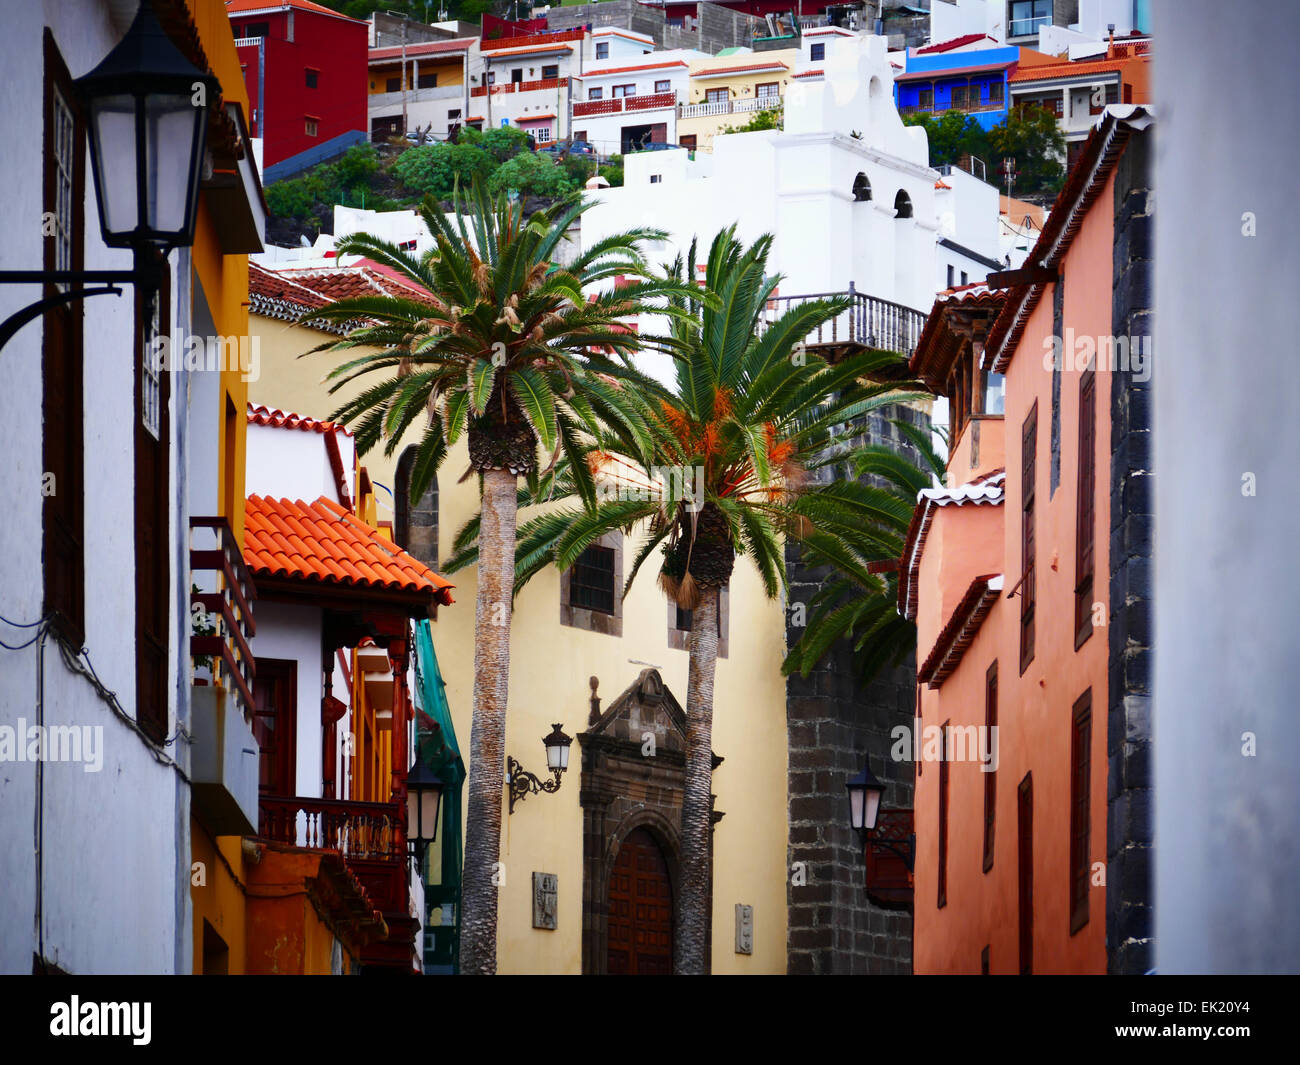 Street scene in Garachico North Tenerife island Canary islands Spain Stock Photo